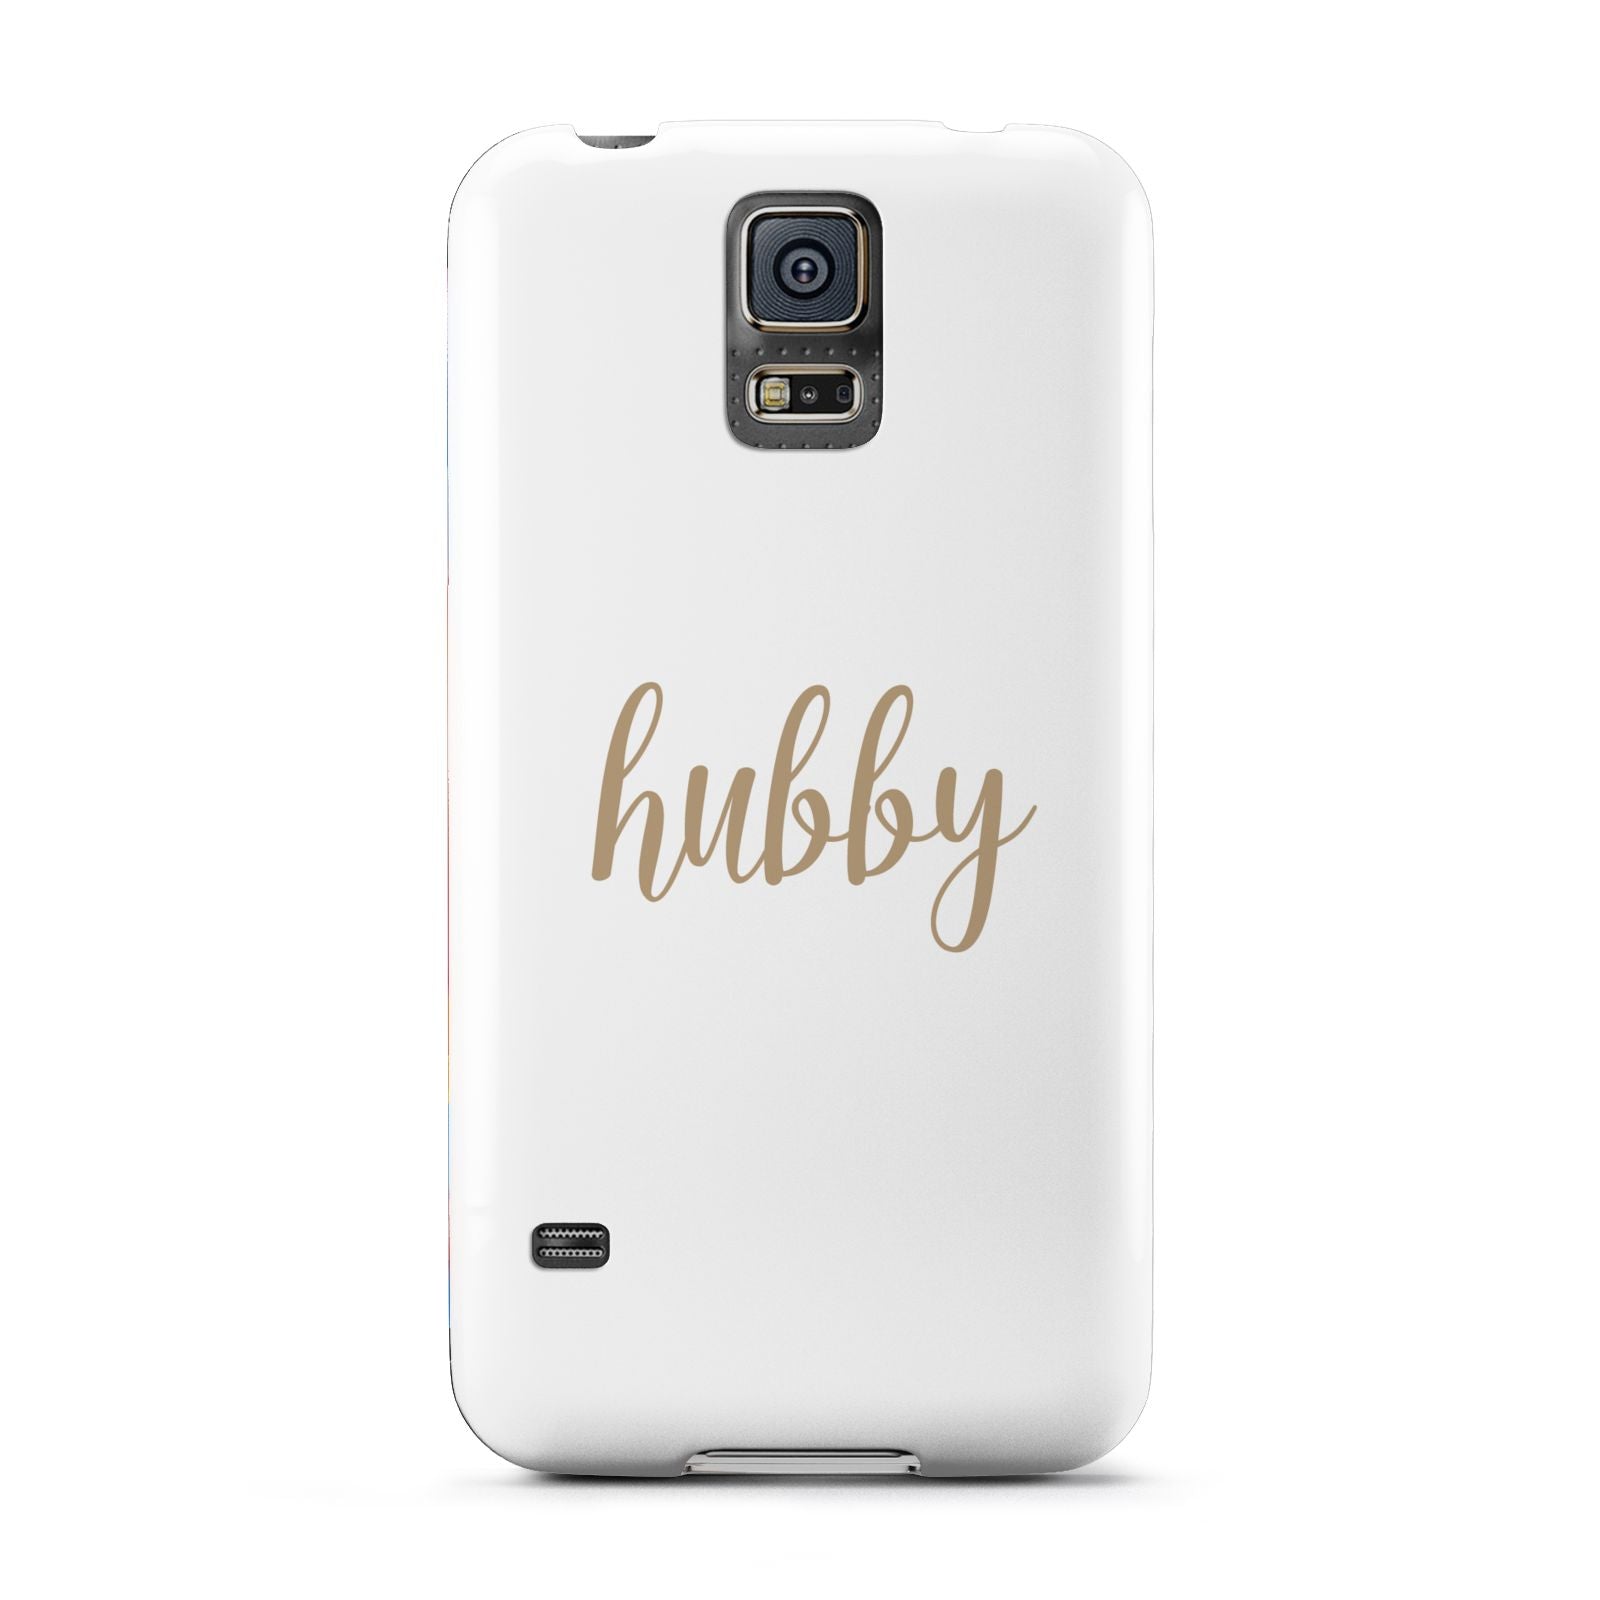 Hubby Samsung Galaxy S5 Case